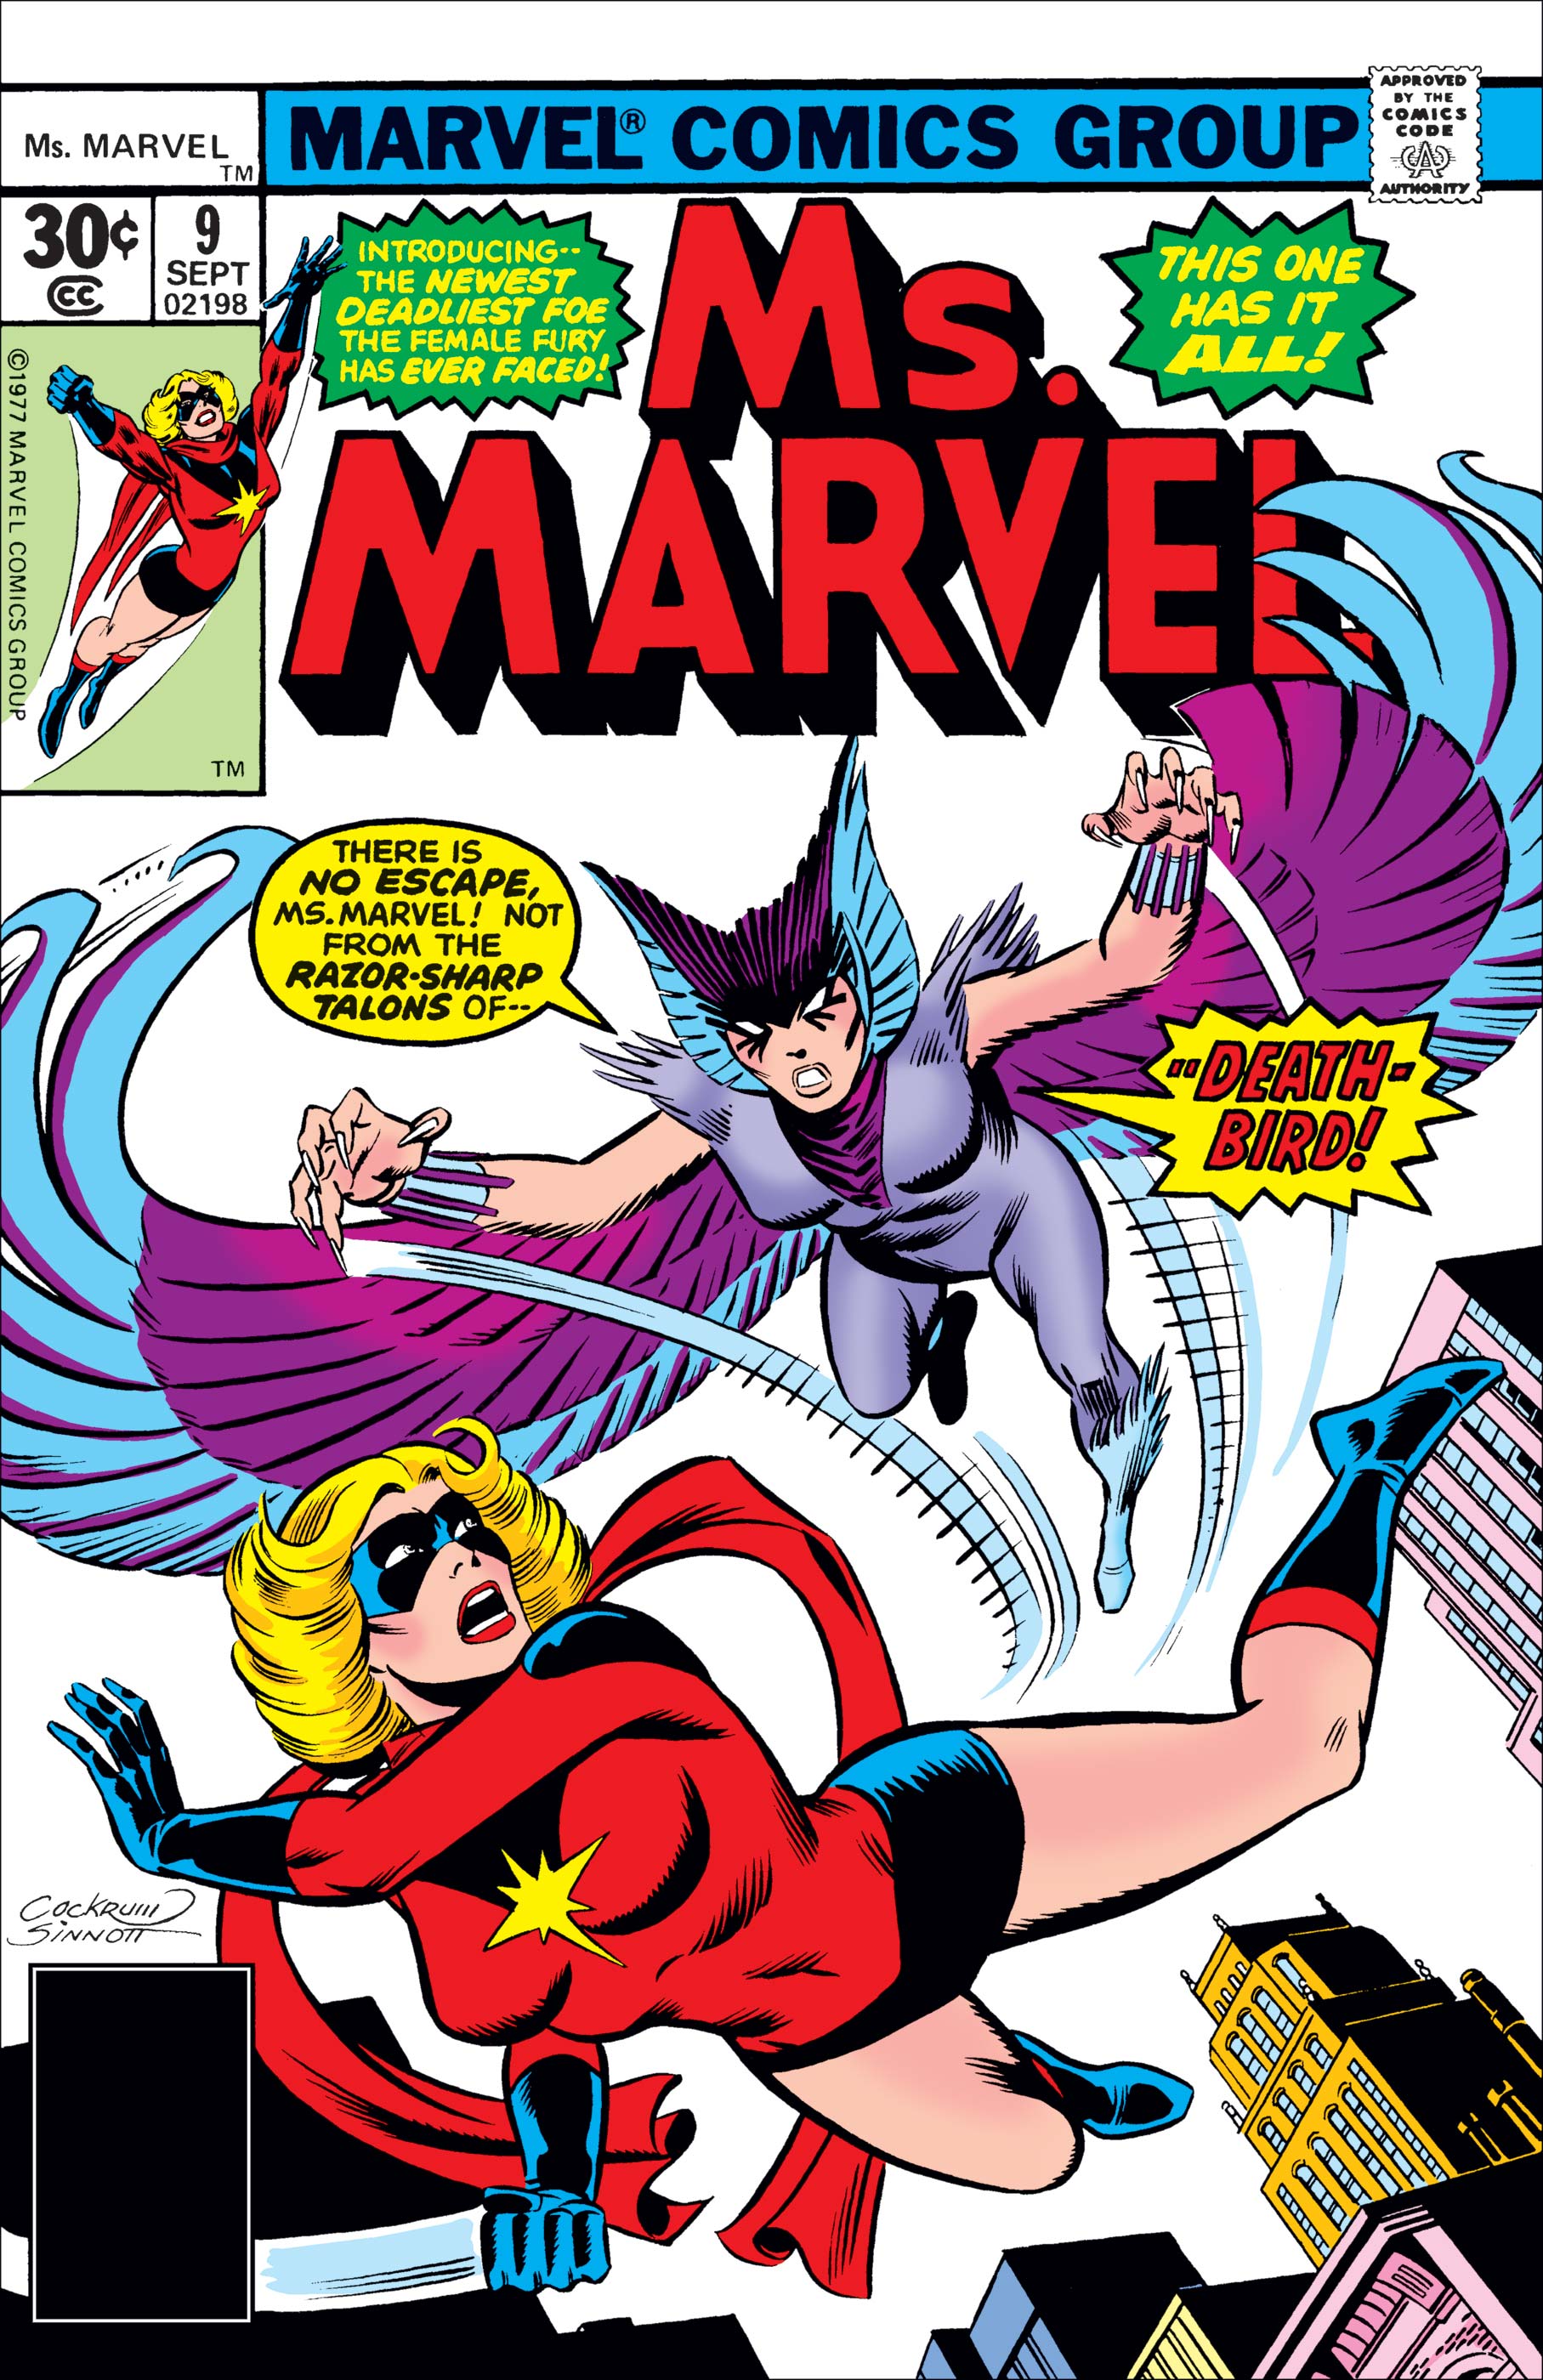 Ms. Marvel (1977) #9